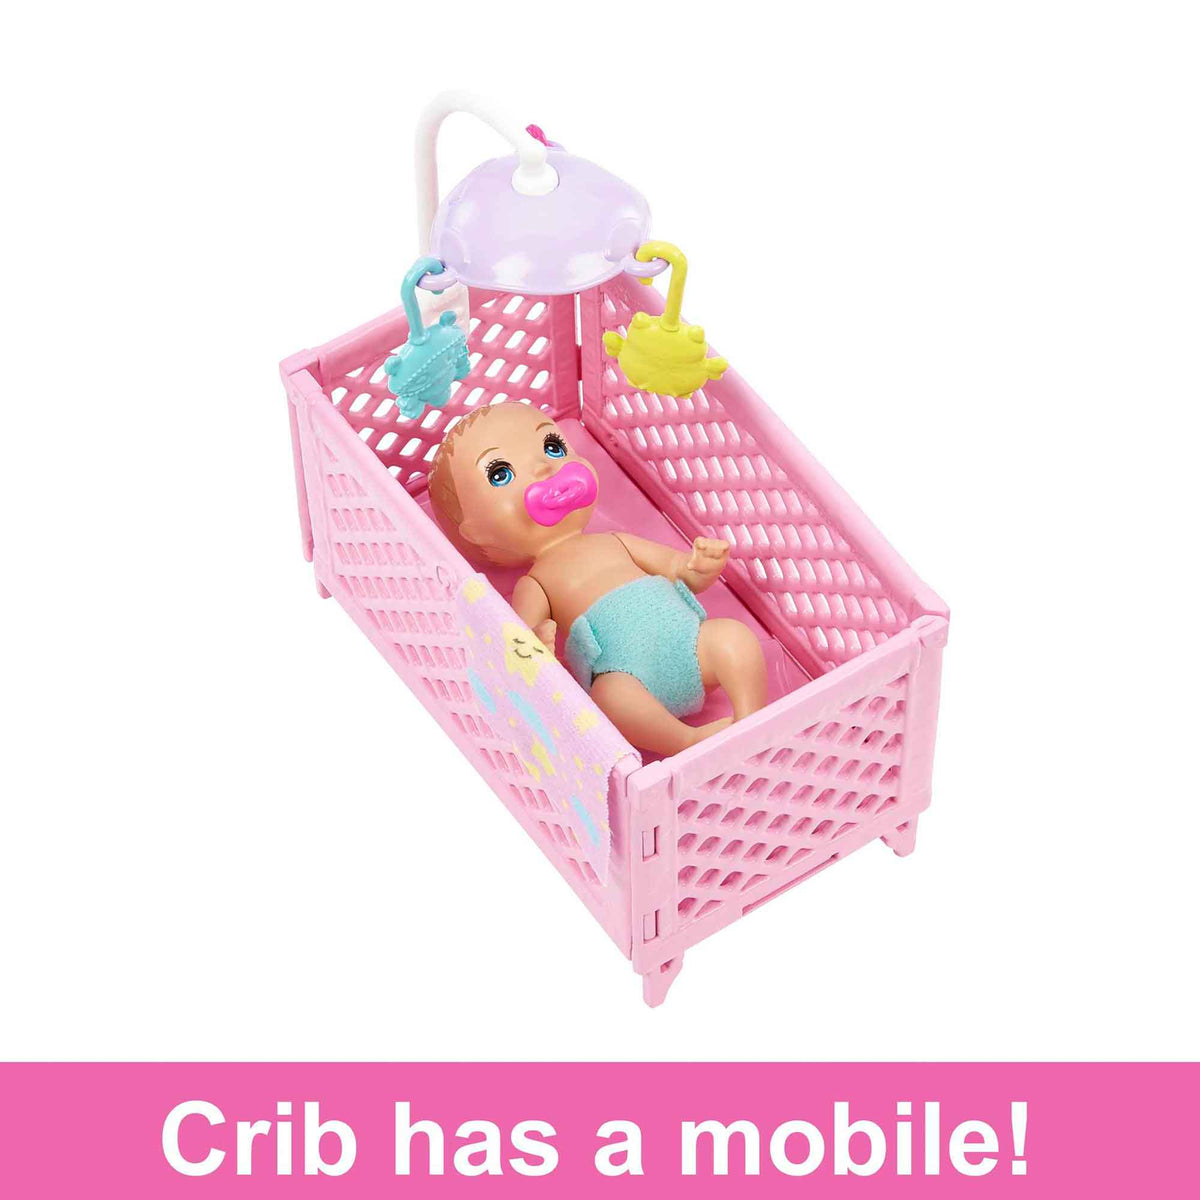 Barbie Skipper Big Babysitting Adventure Sleepy Baby Playset